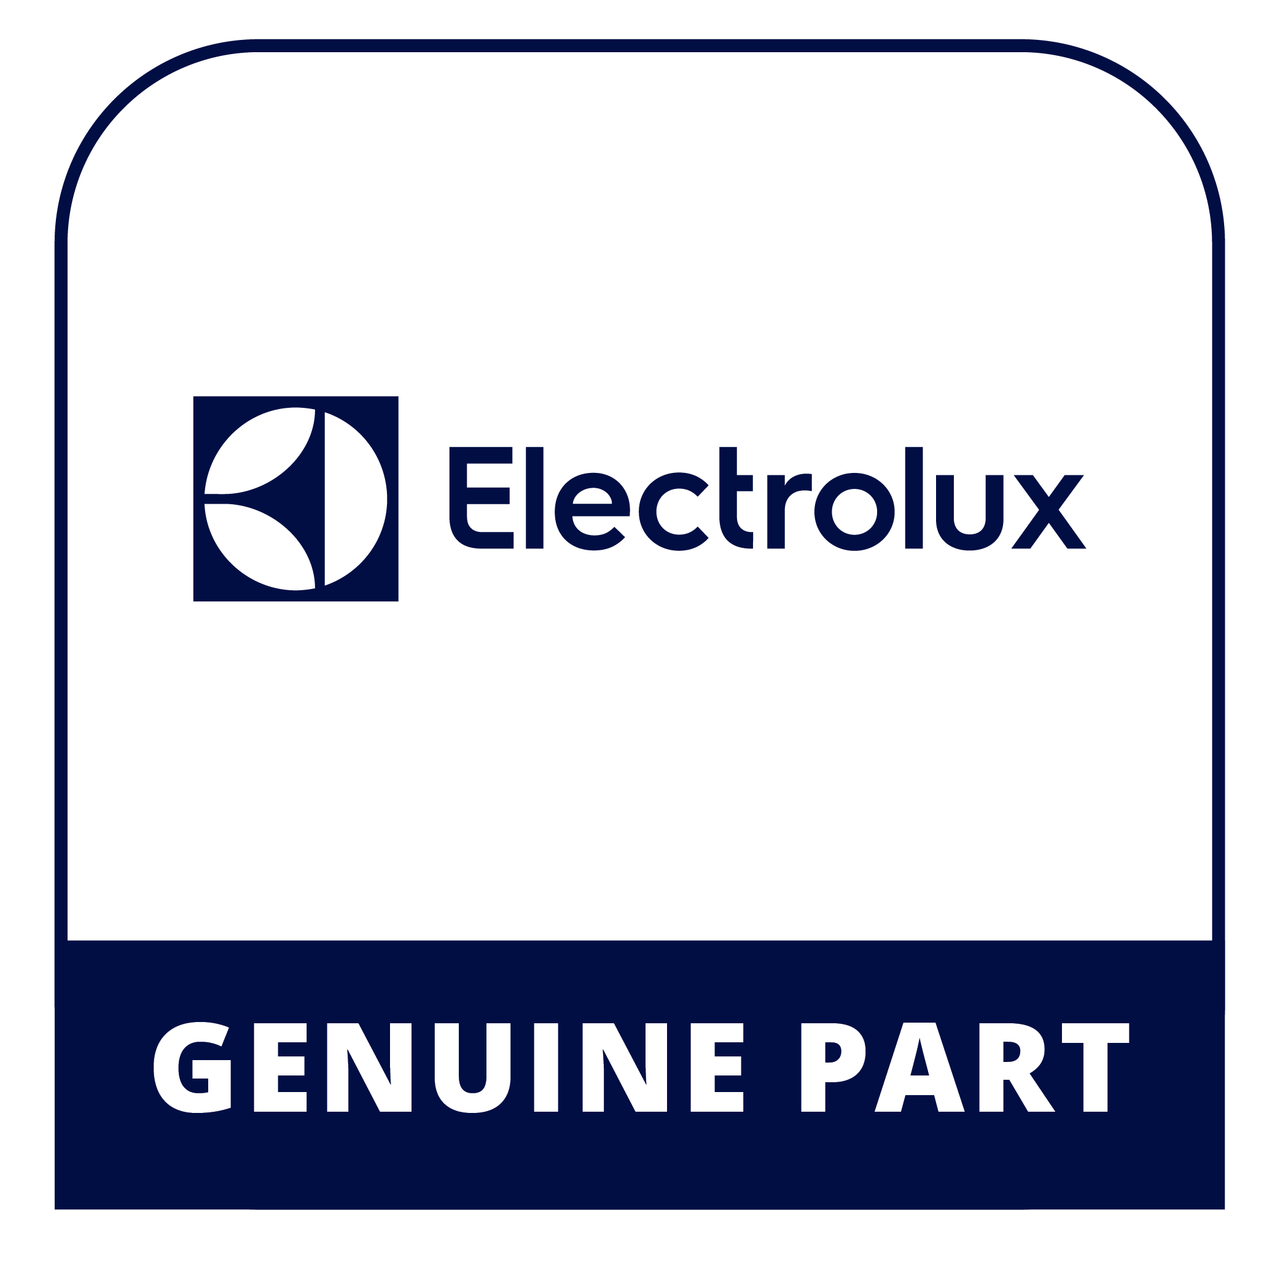 Frigidaire - Electrolux 3131903 Bumper - Genuine Electrolux Part